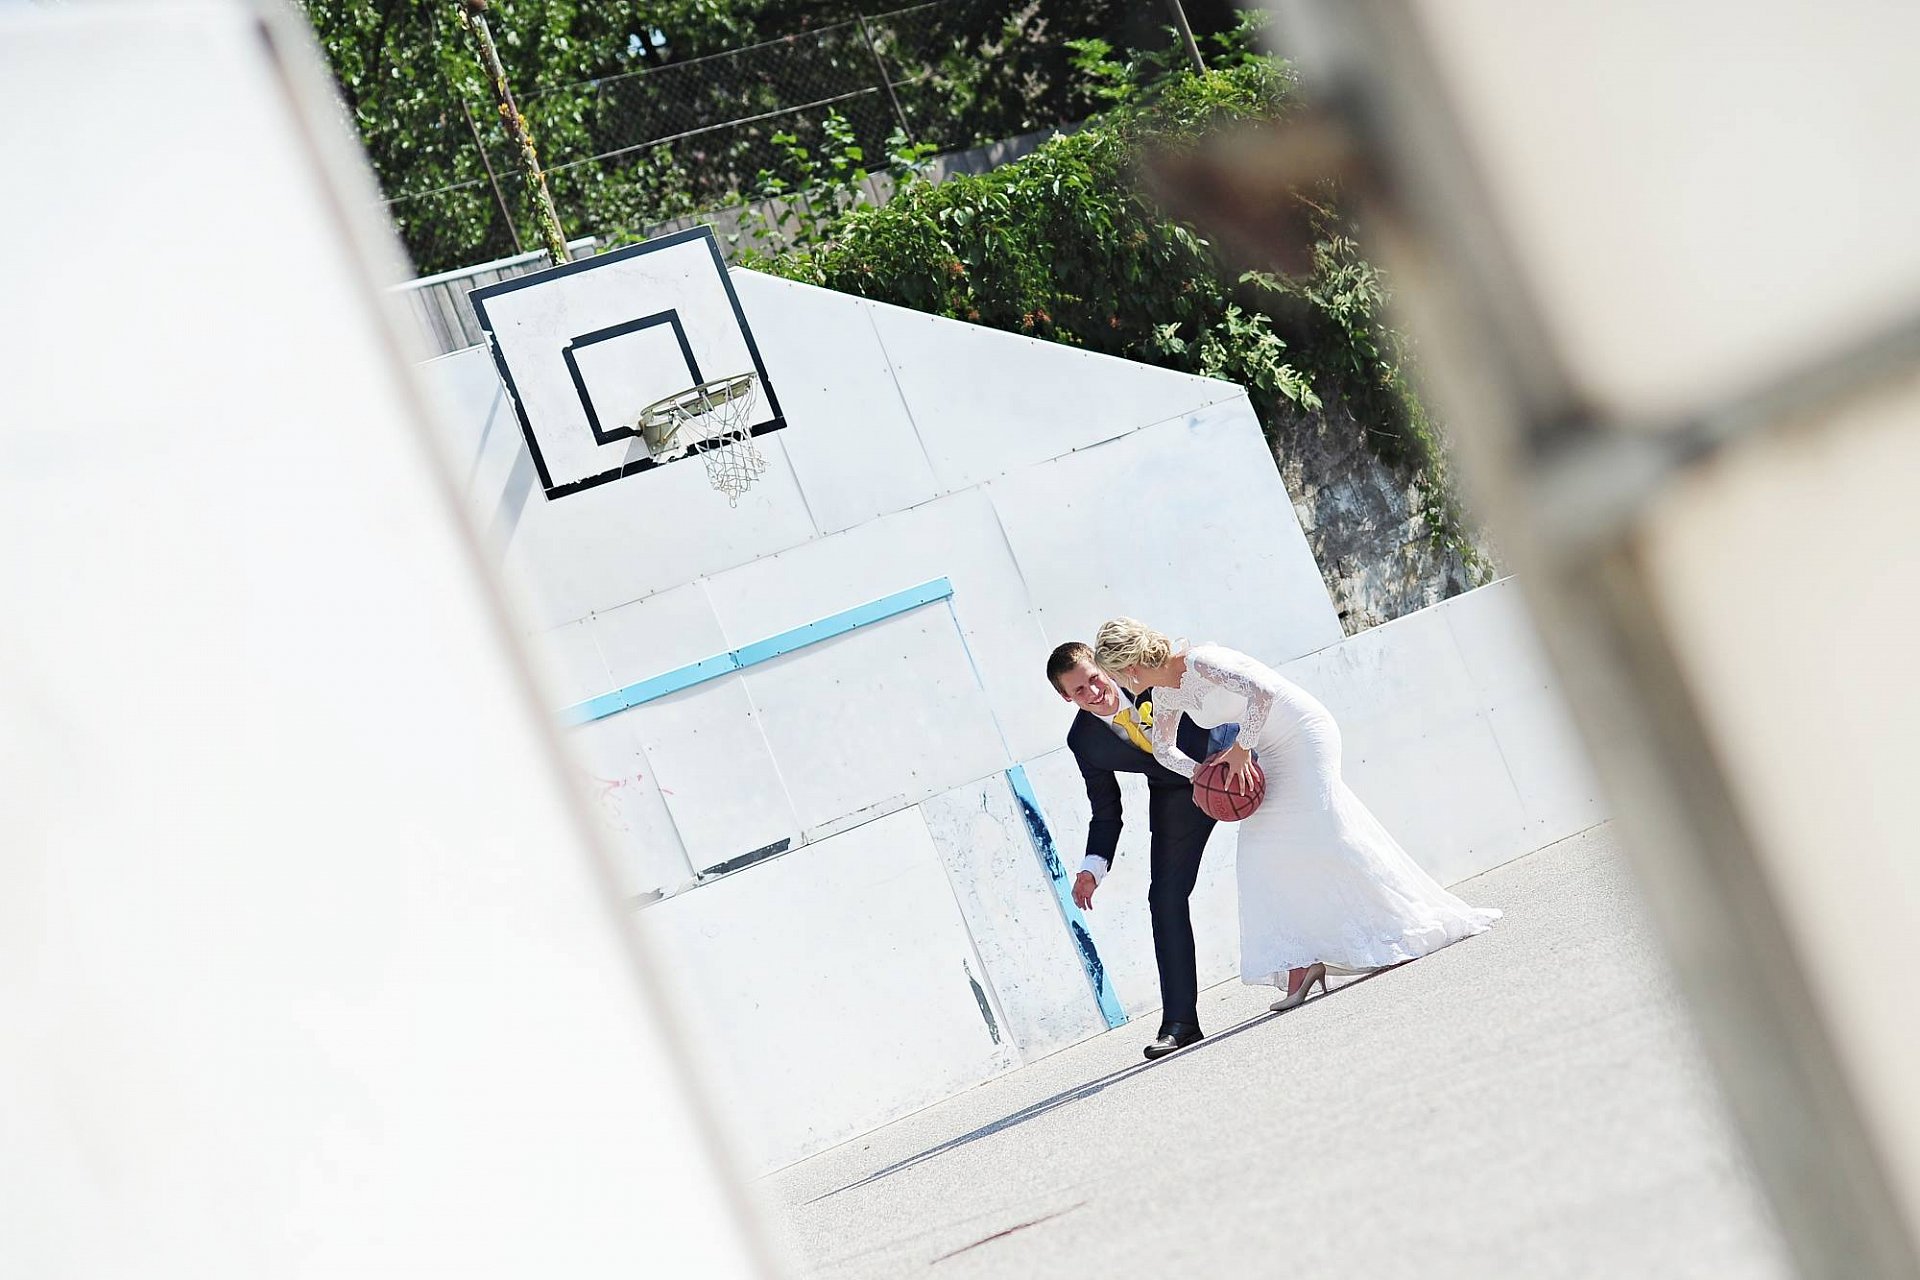 Mr. & Mrs. Raisovi aka Hořická basketbalová svatba ... :)